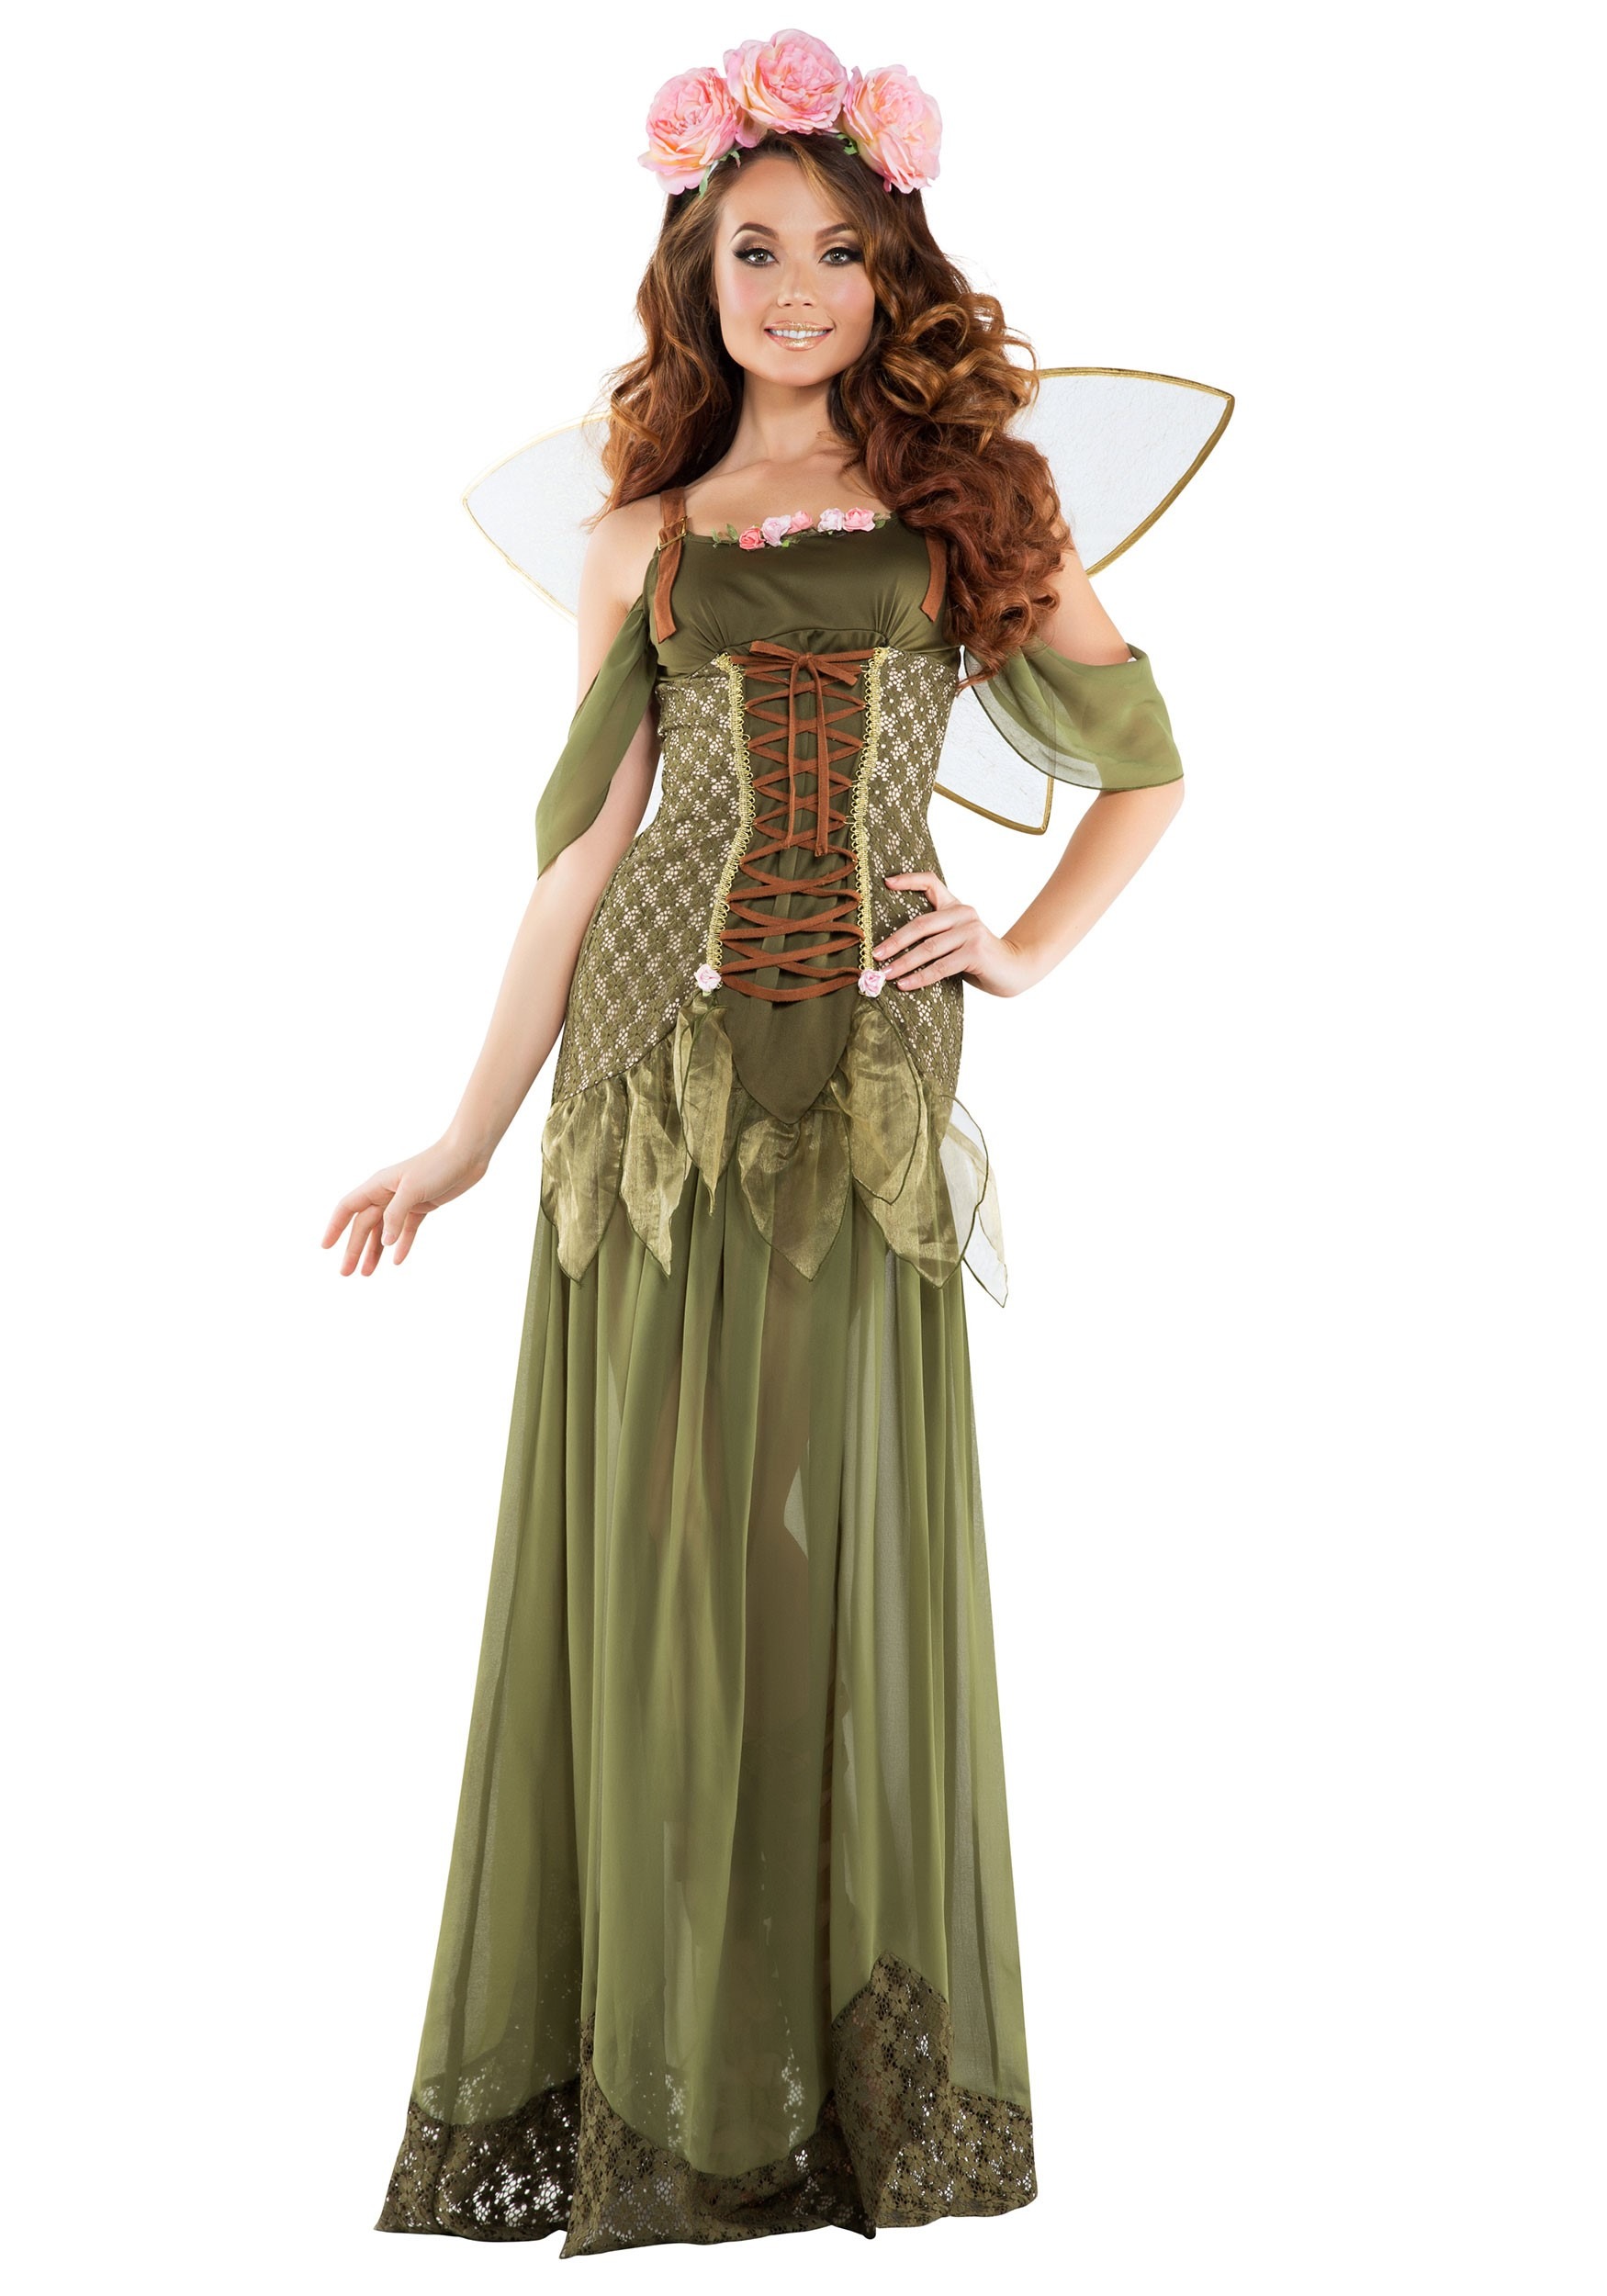 fairy princess costume adults, biggest sale off 76% - rdd.edu.iq